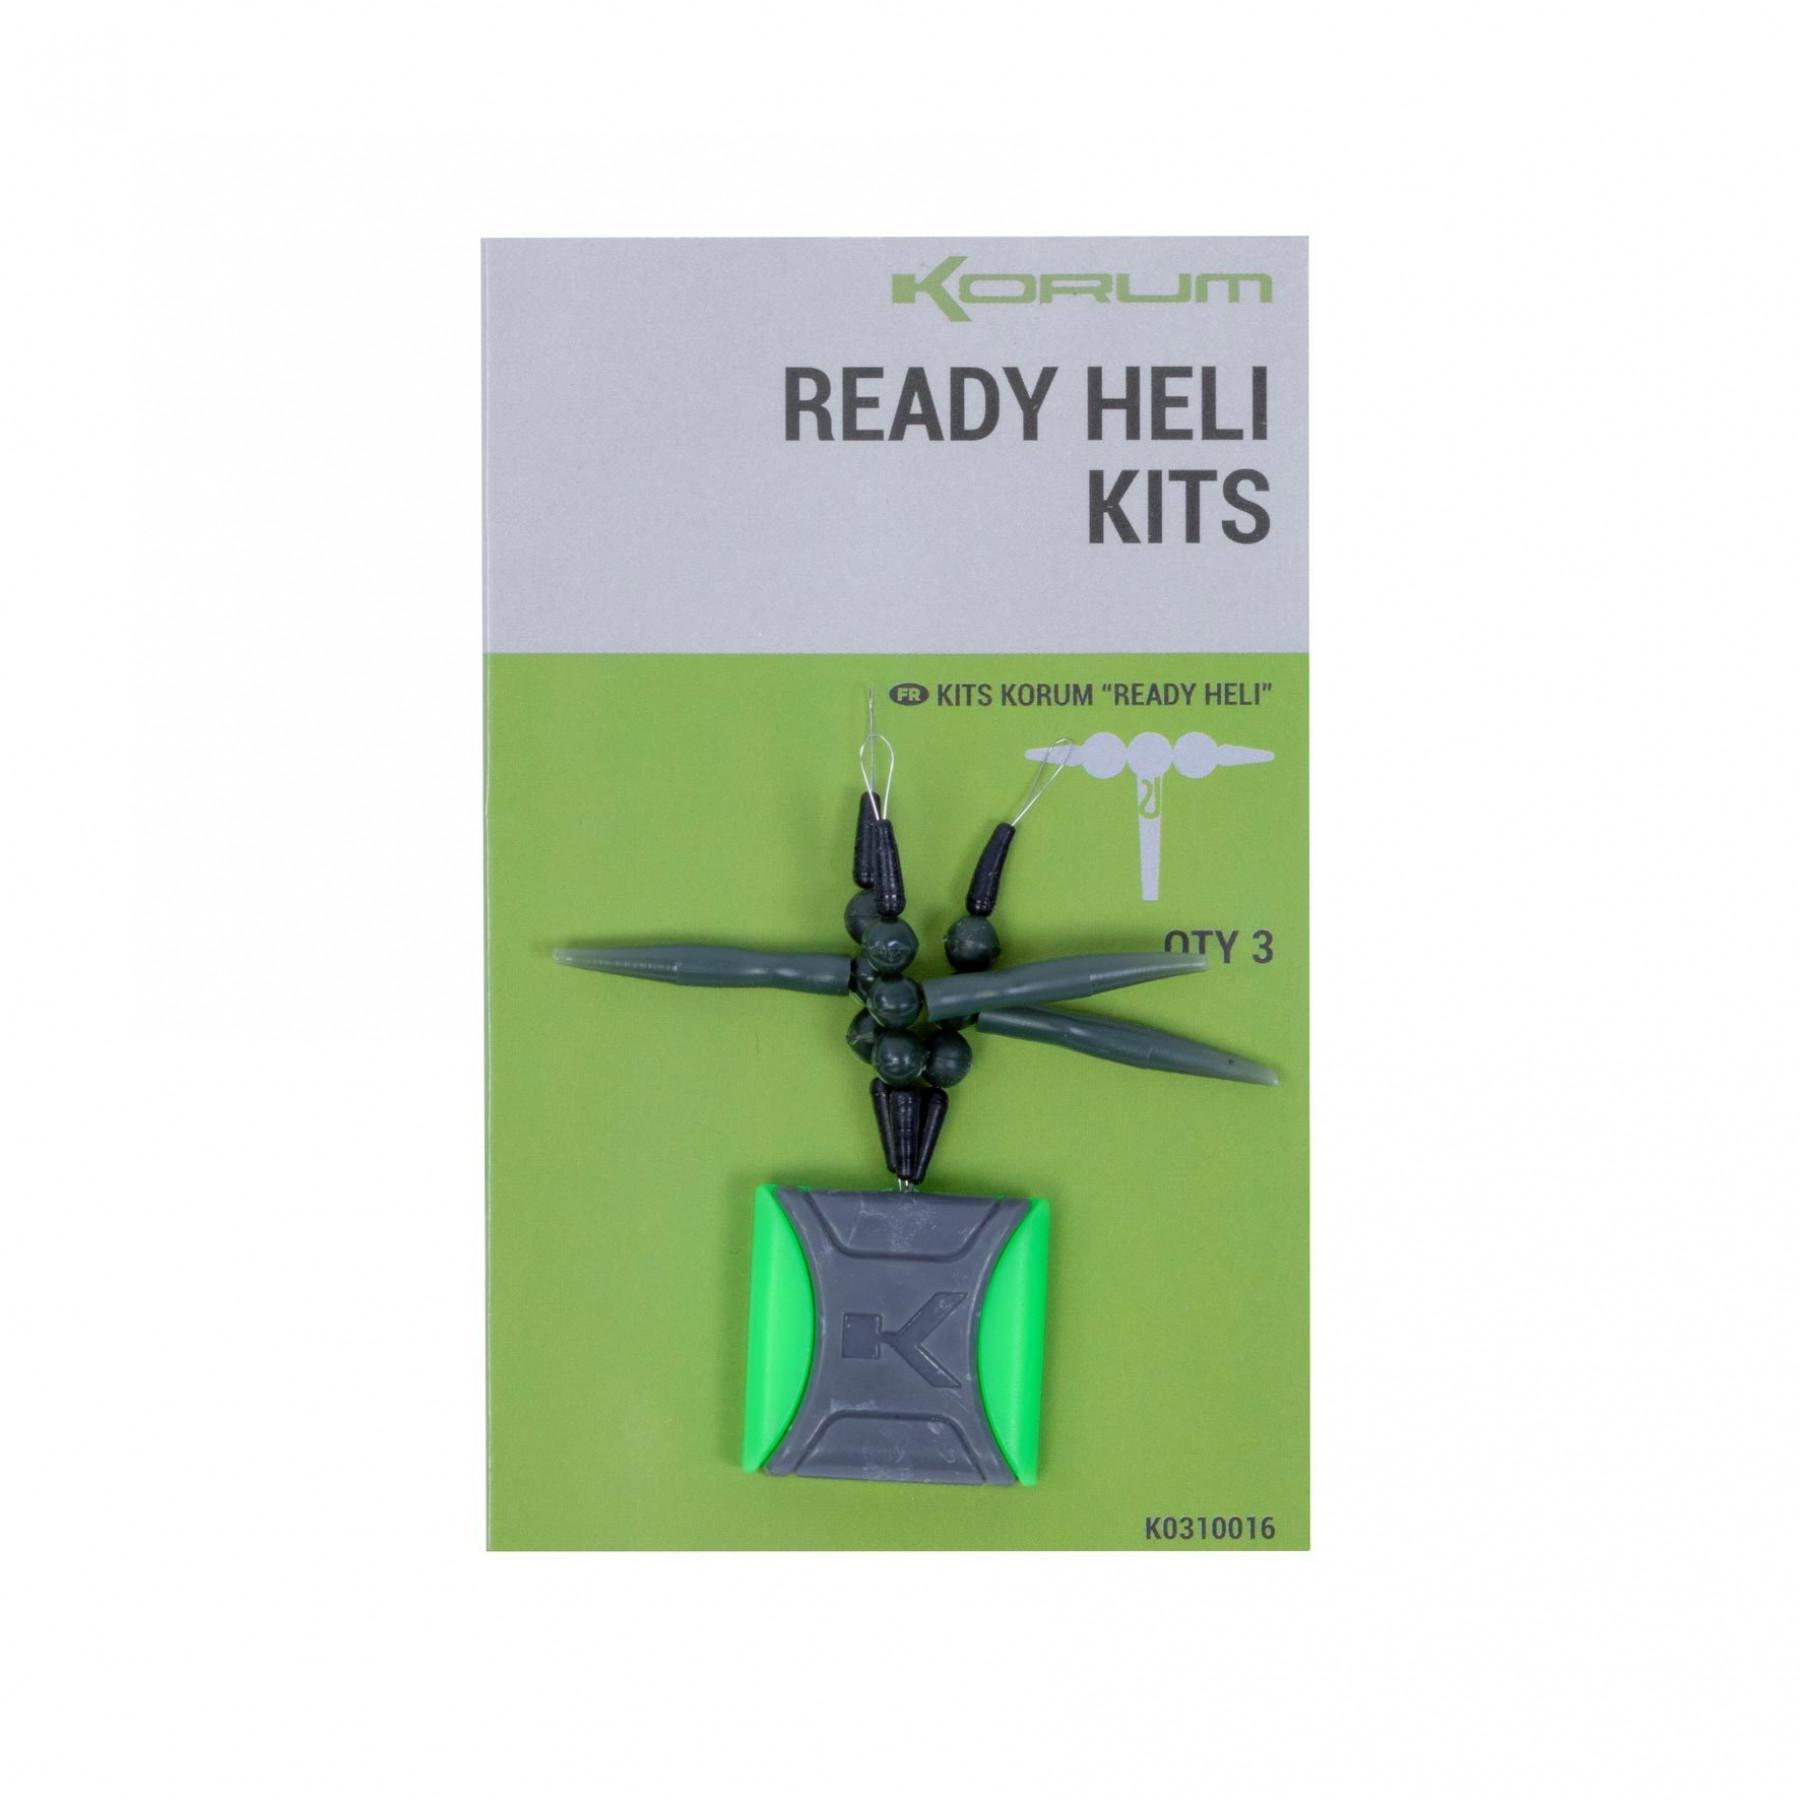 Helicopter loan kits Korum 1x10